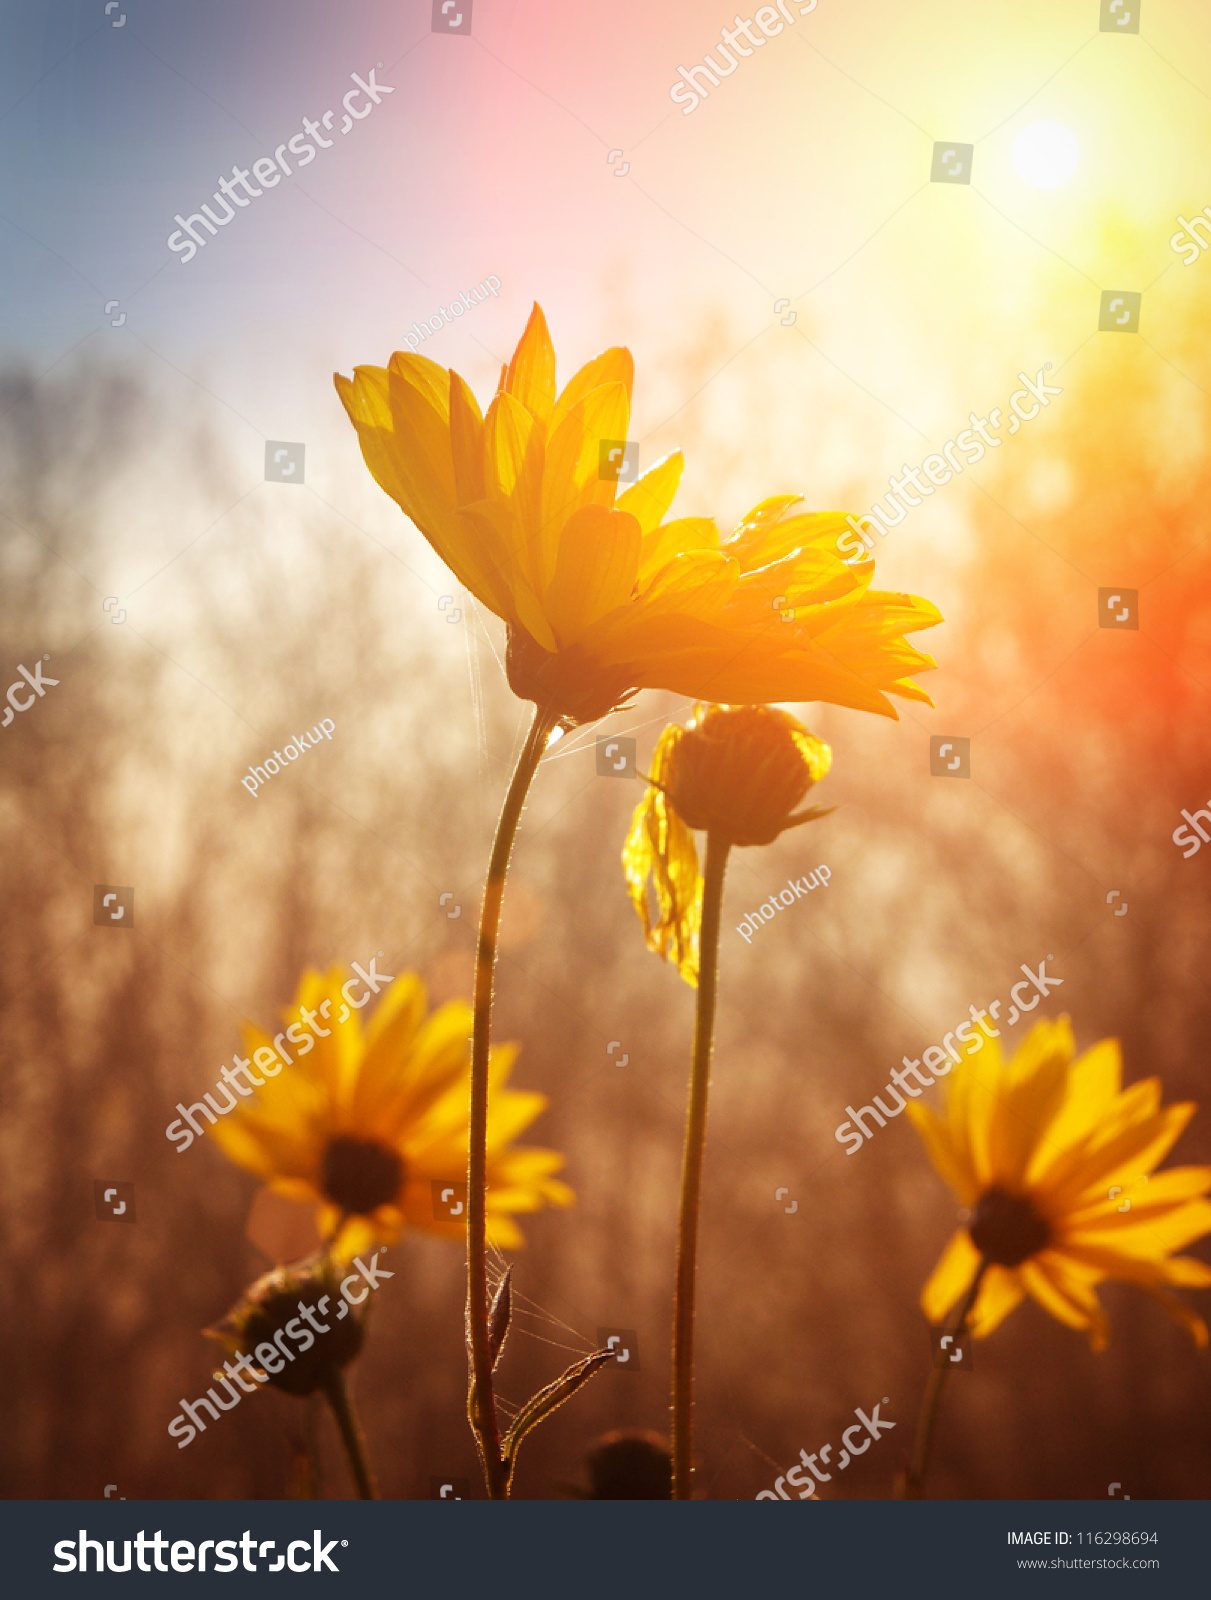 Flowers at sunrise #116298694